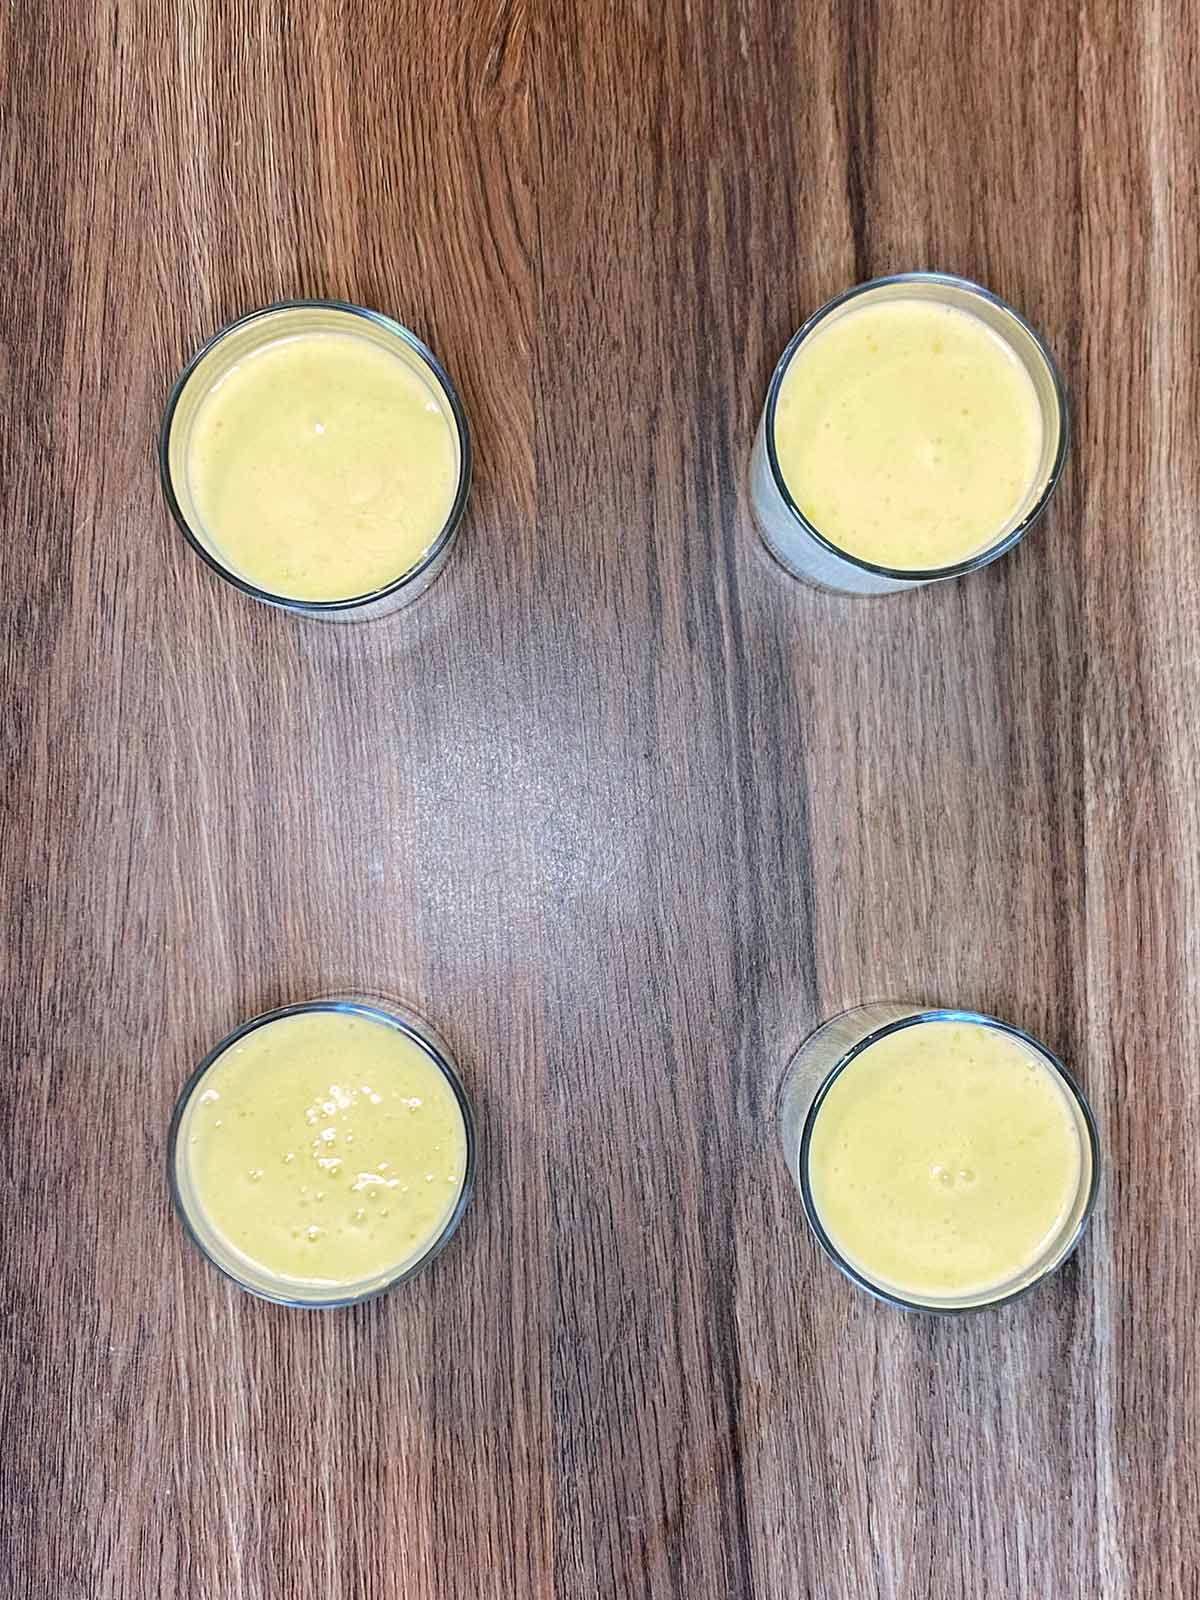 Four serving glasses containing unset lemon posset.